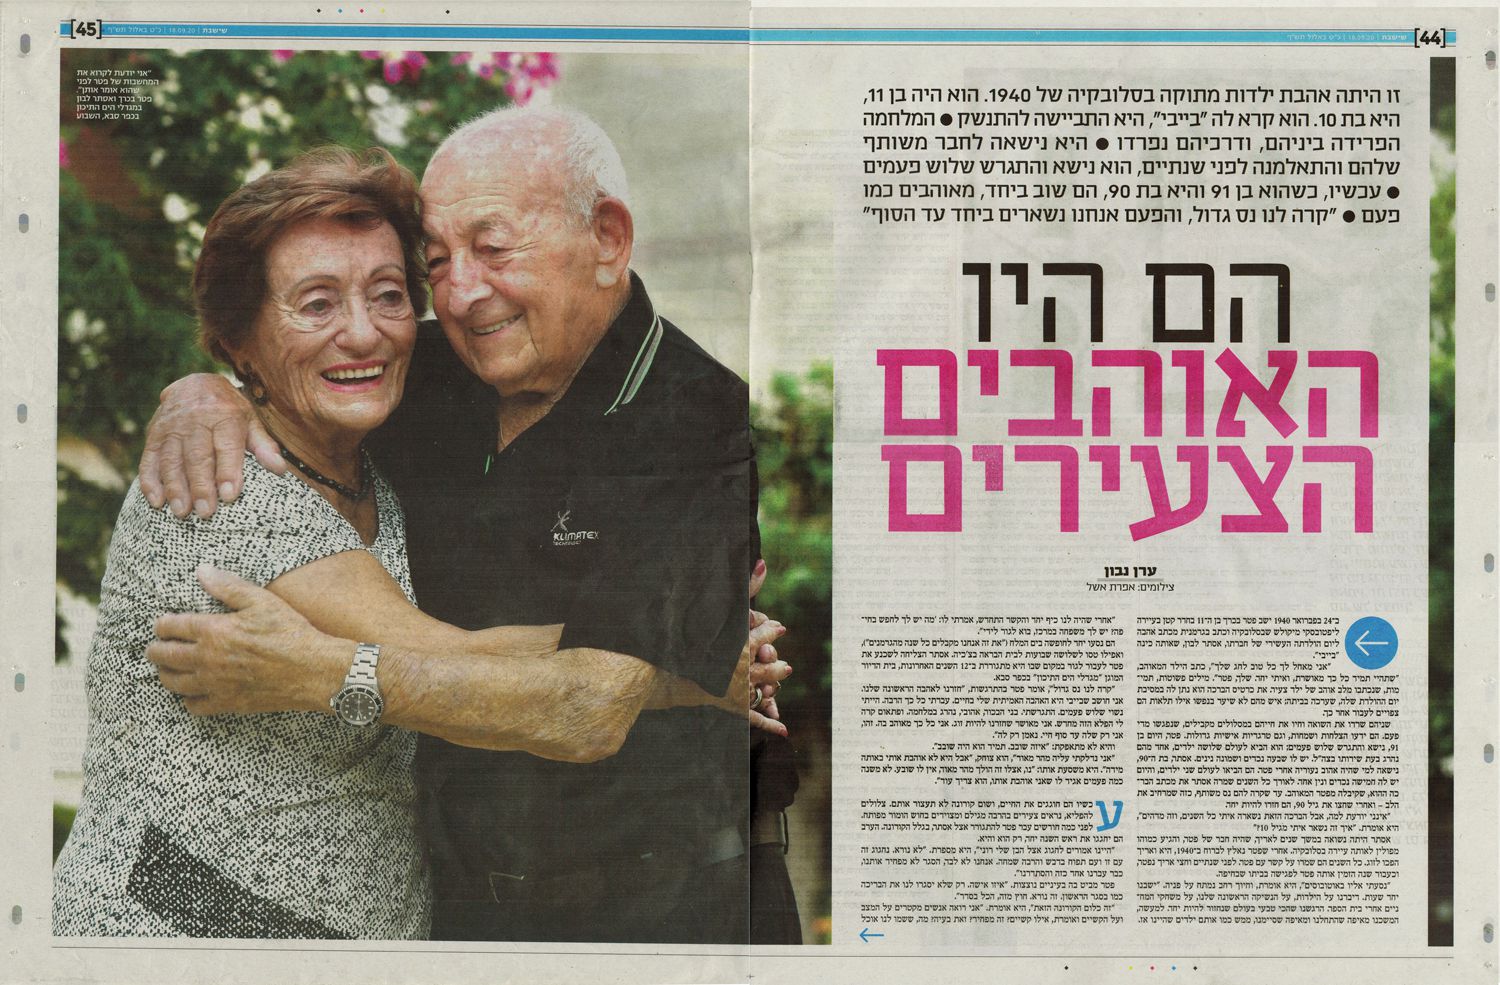 Eran Navon, photo: Efrat Eshel. "Shishishabat", supplement to the newspaper "Israel Hayom", 18.09.2020, p. 44-45